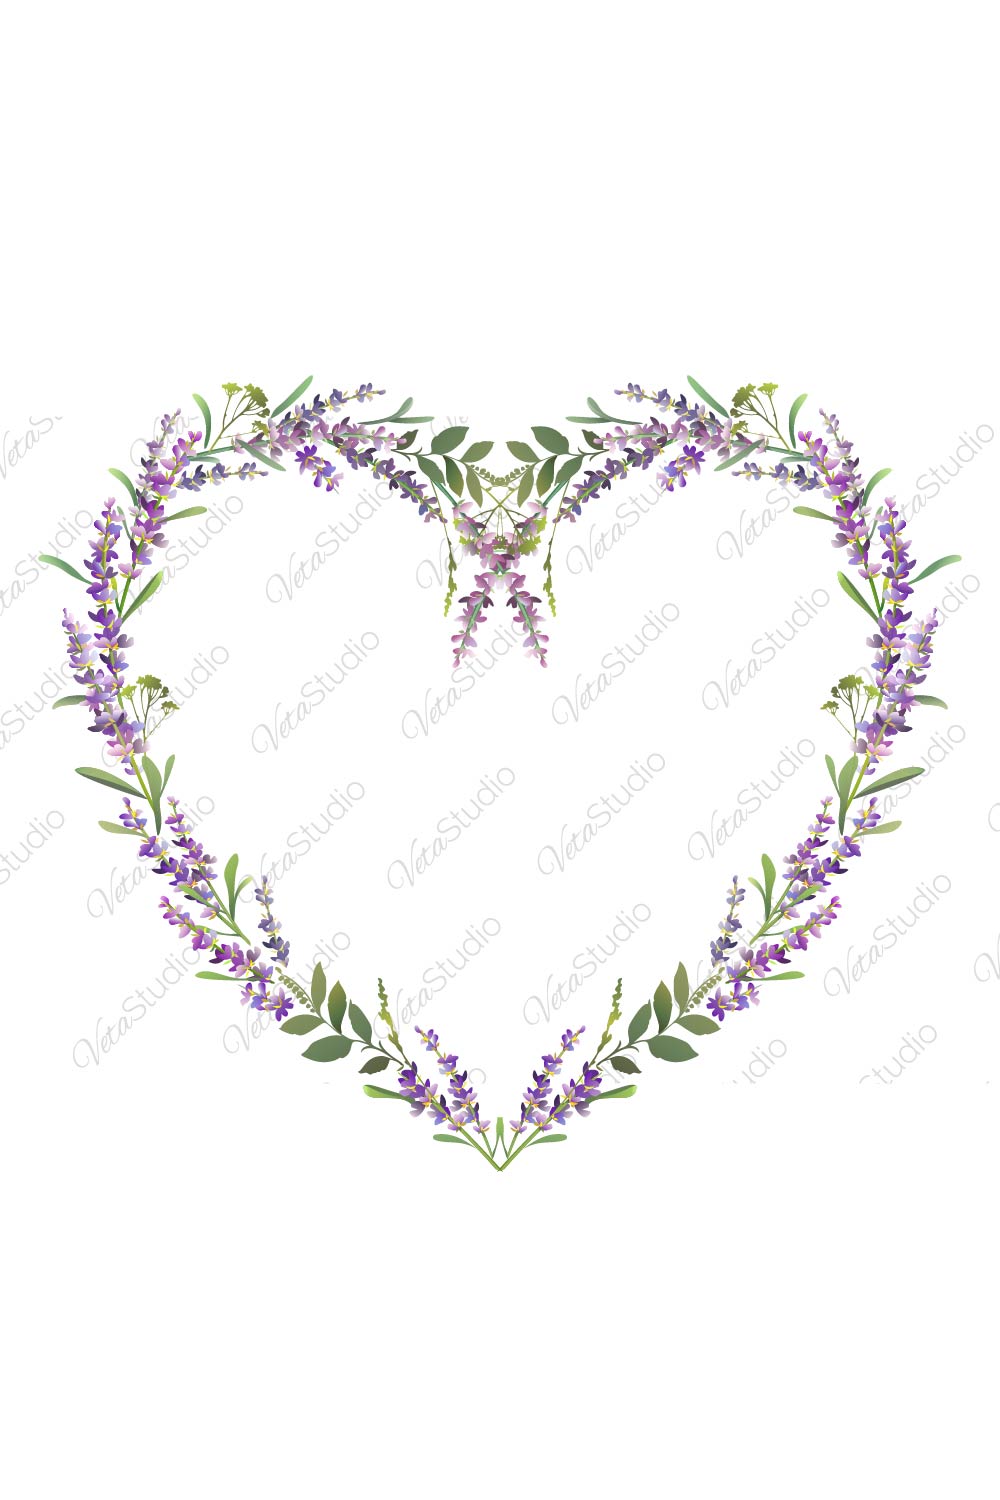 Lavender Heart Lavender Frame - Only 6$ pinterest preview image.